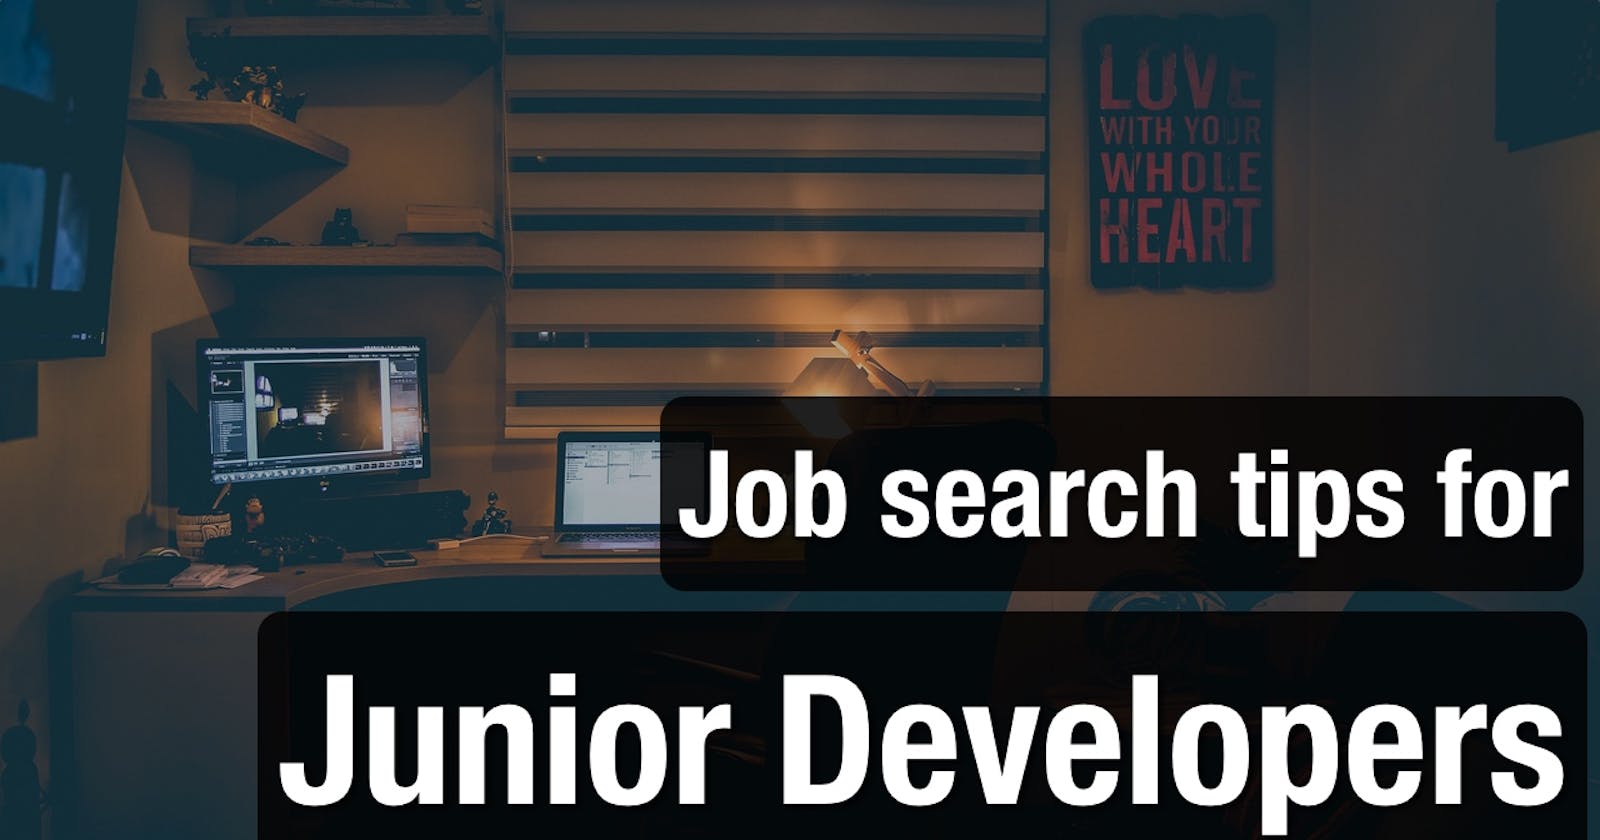 Finding job as a junior developer - tips from tech recruiters